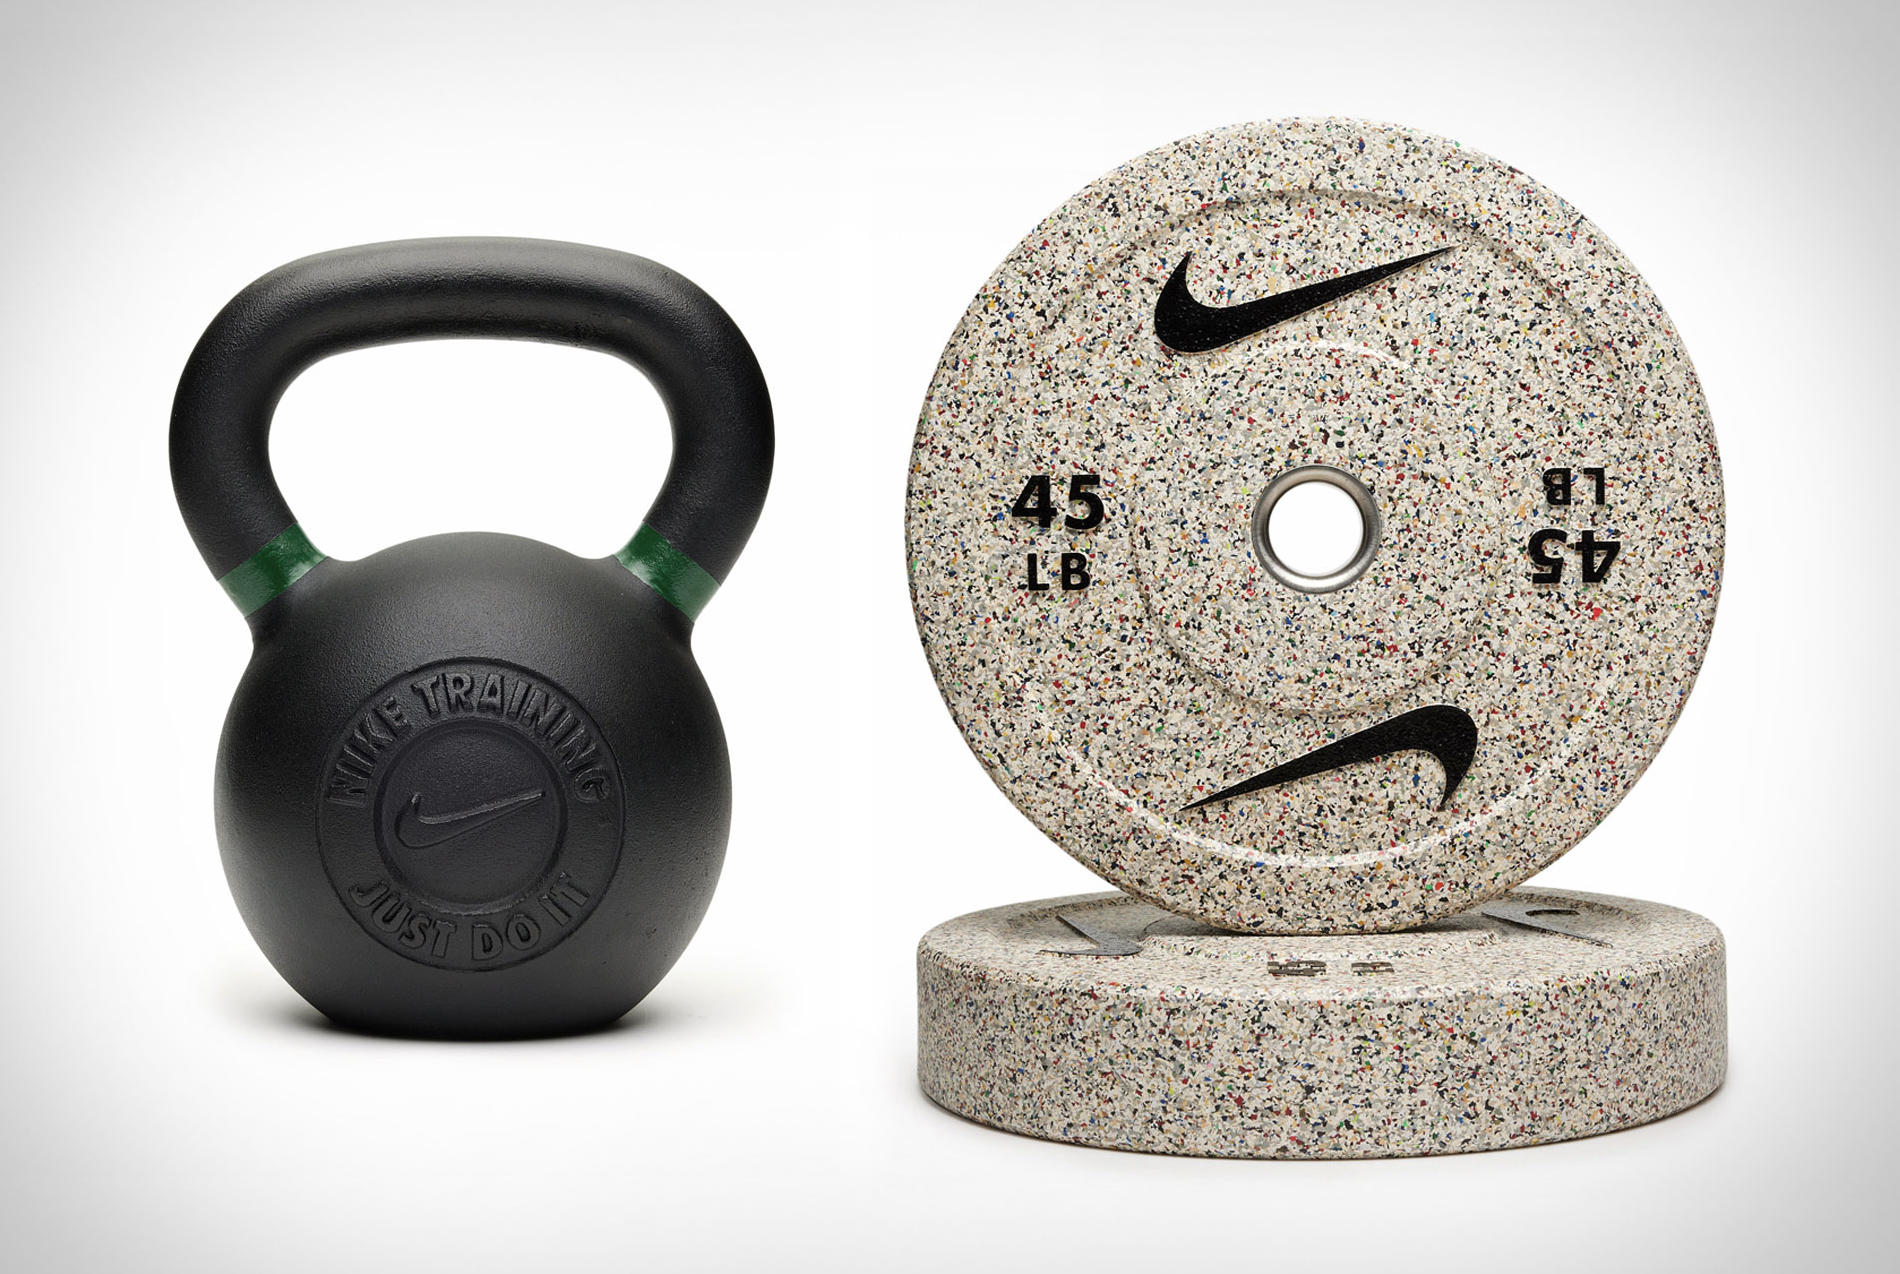 Nike strength equipment